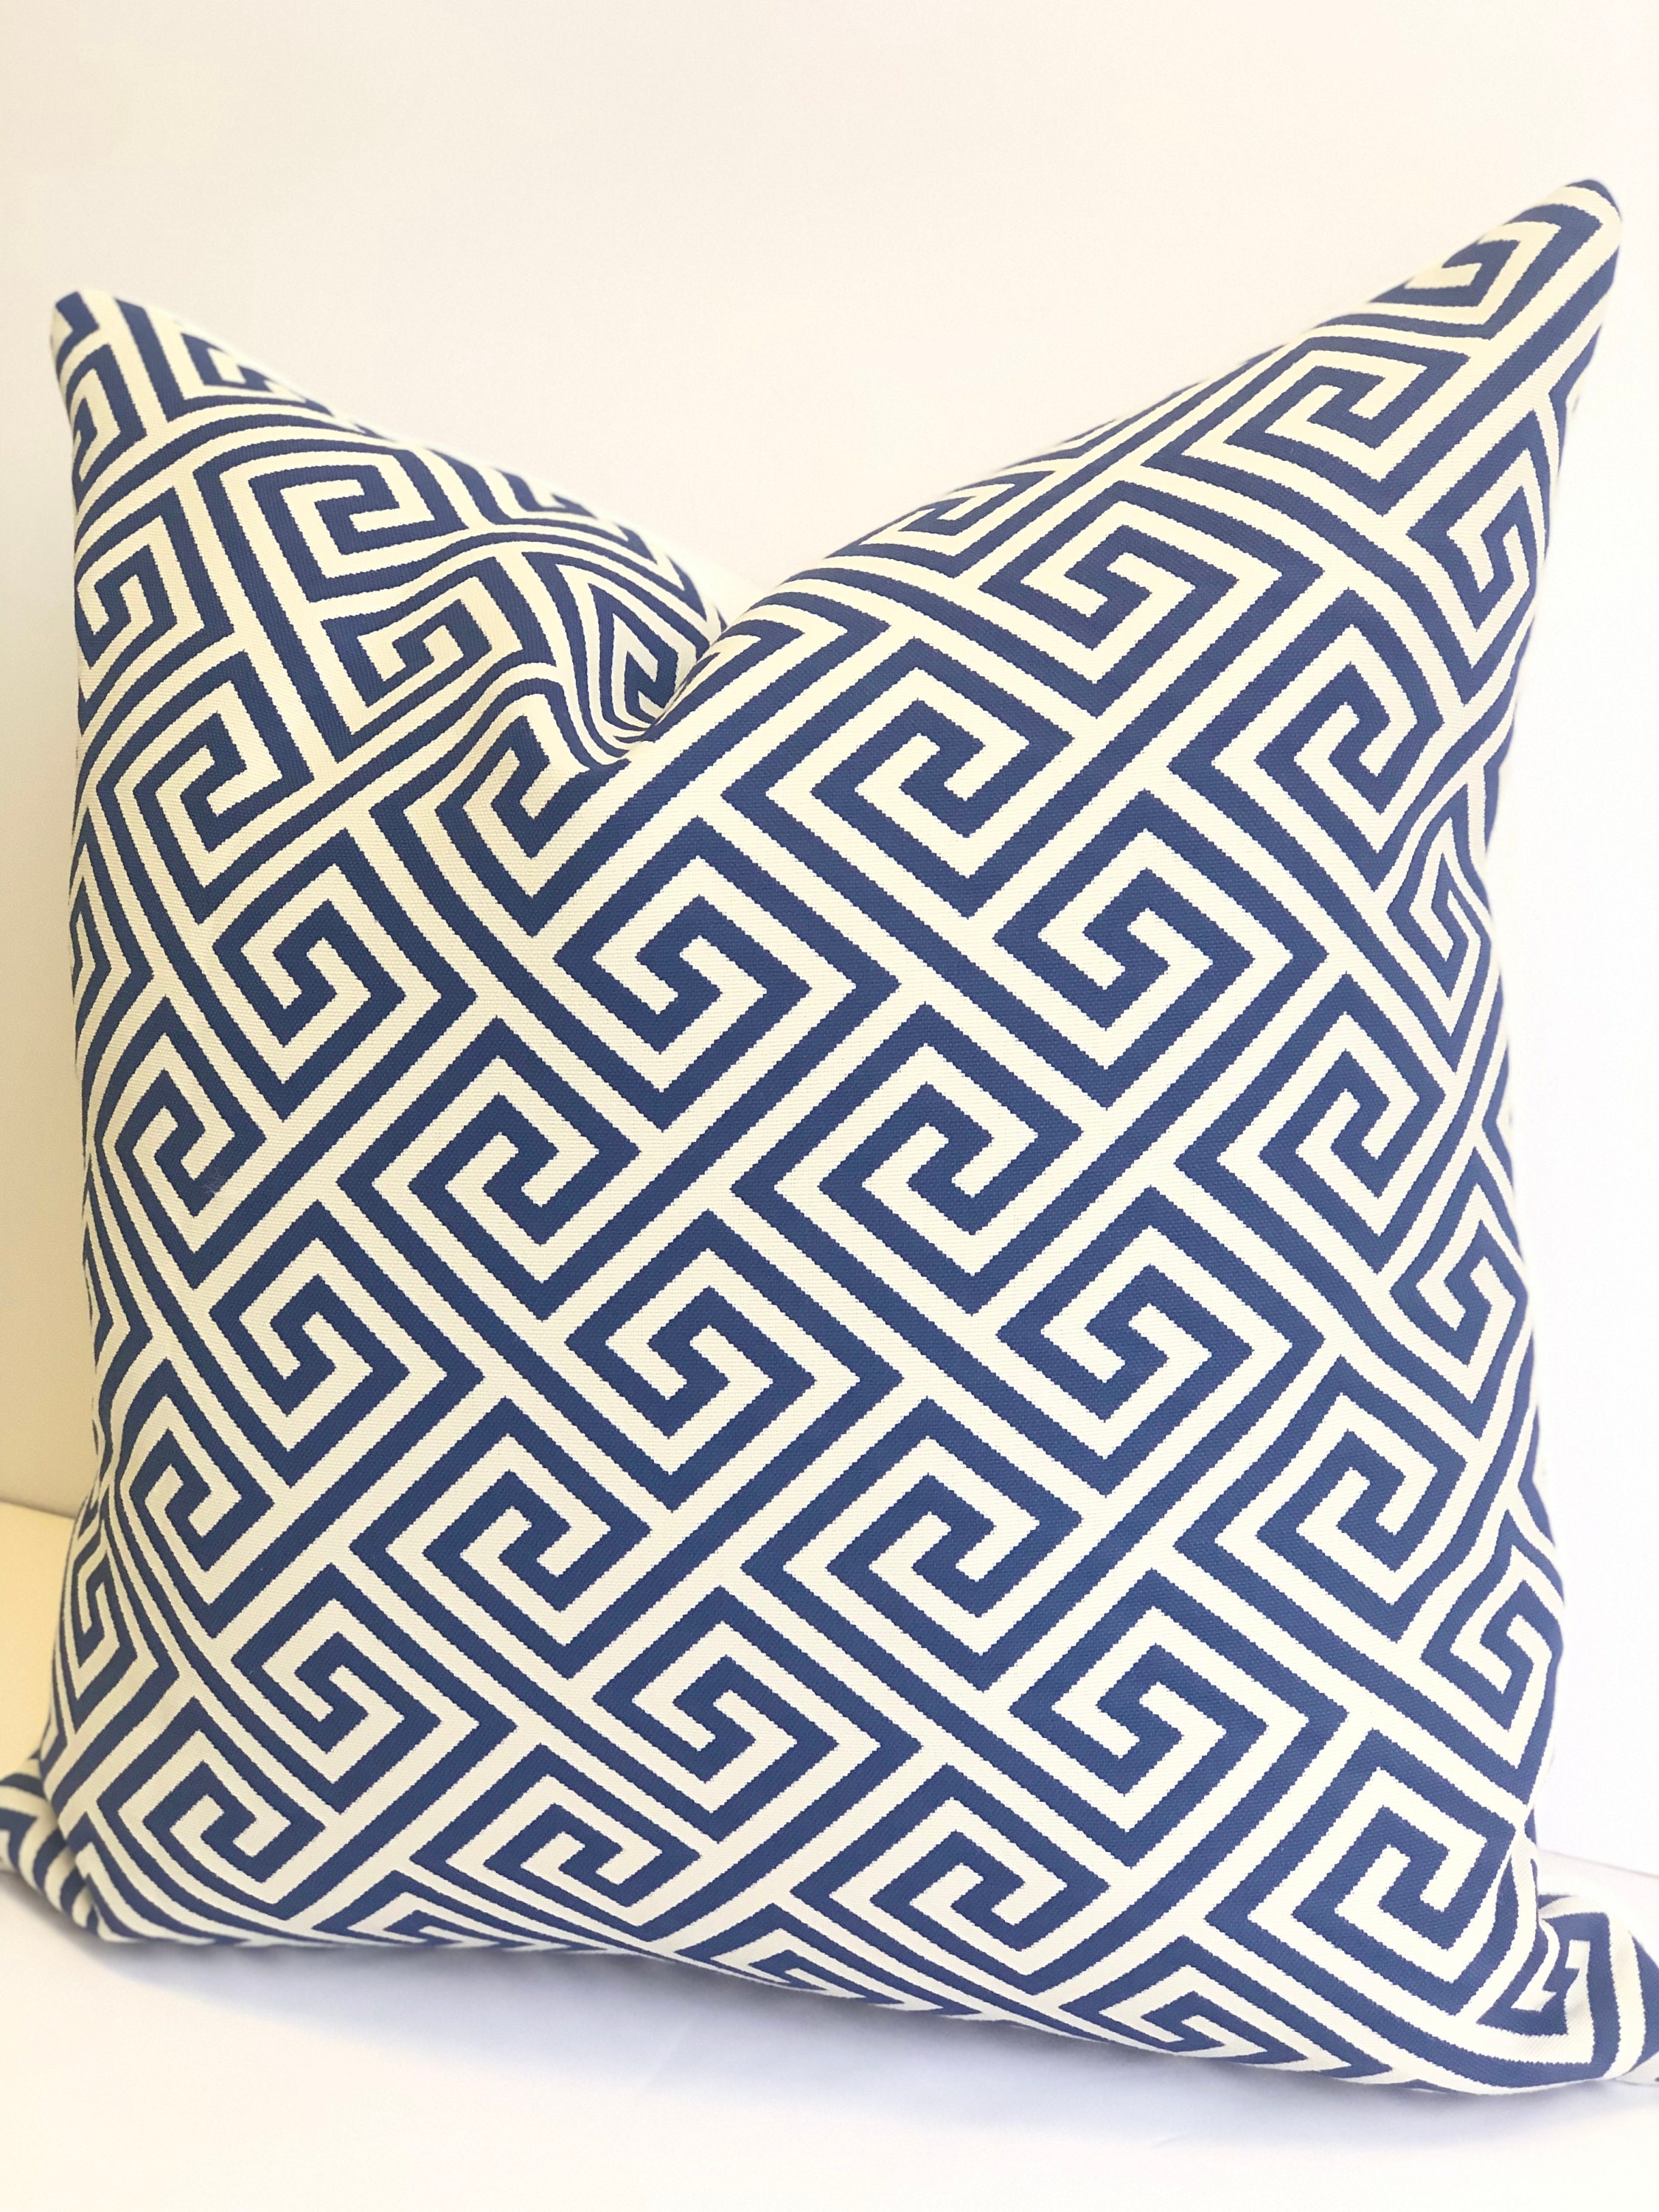 Leopard Print Greek Key Pillow Cover 18x18